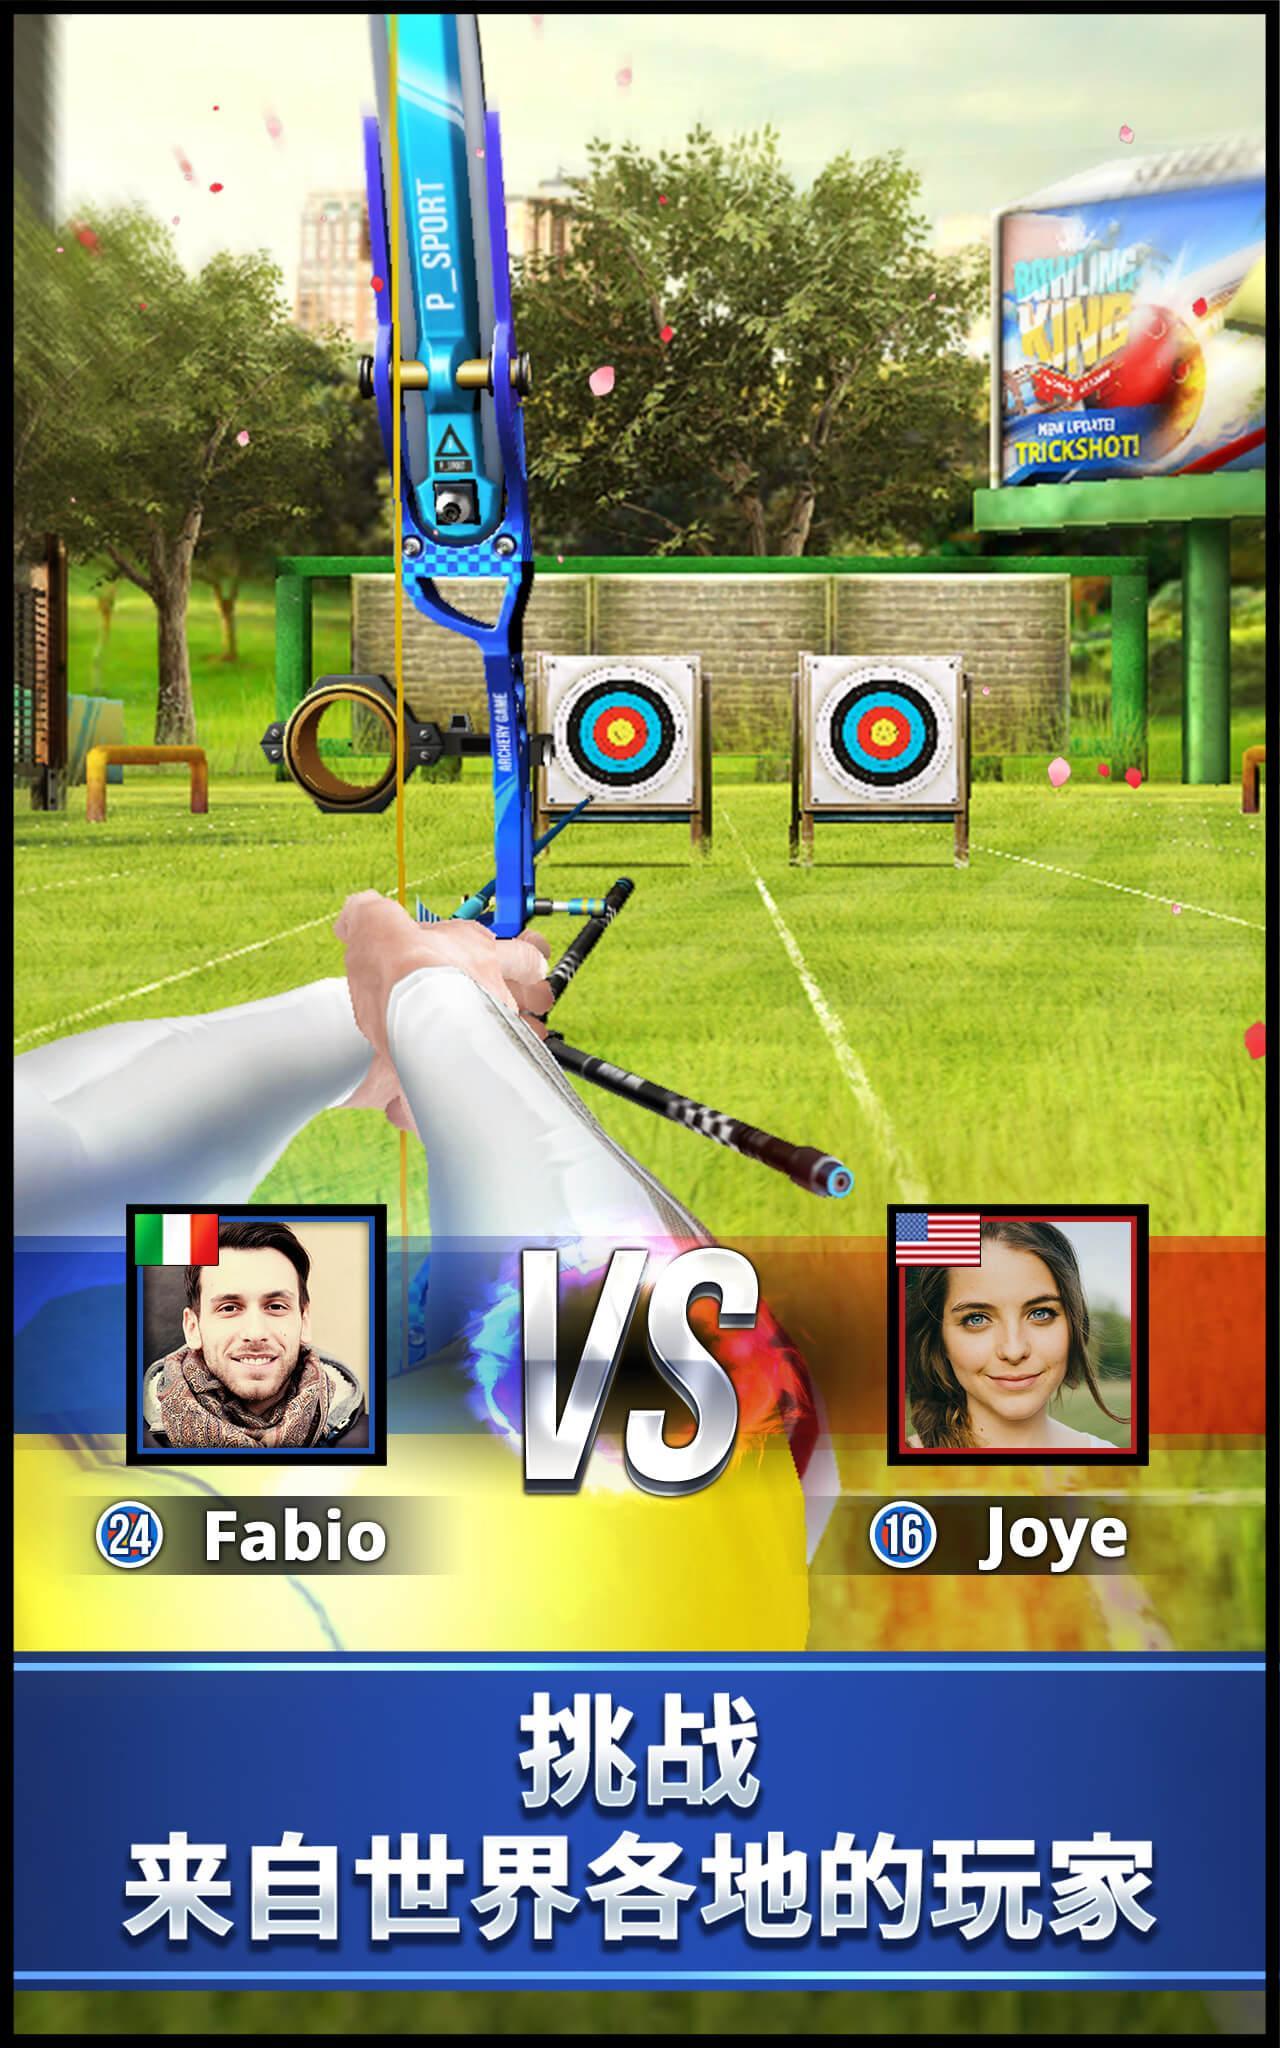 Screenshot of Archery King